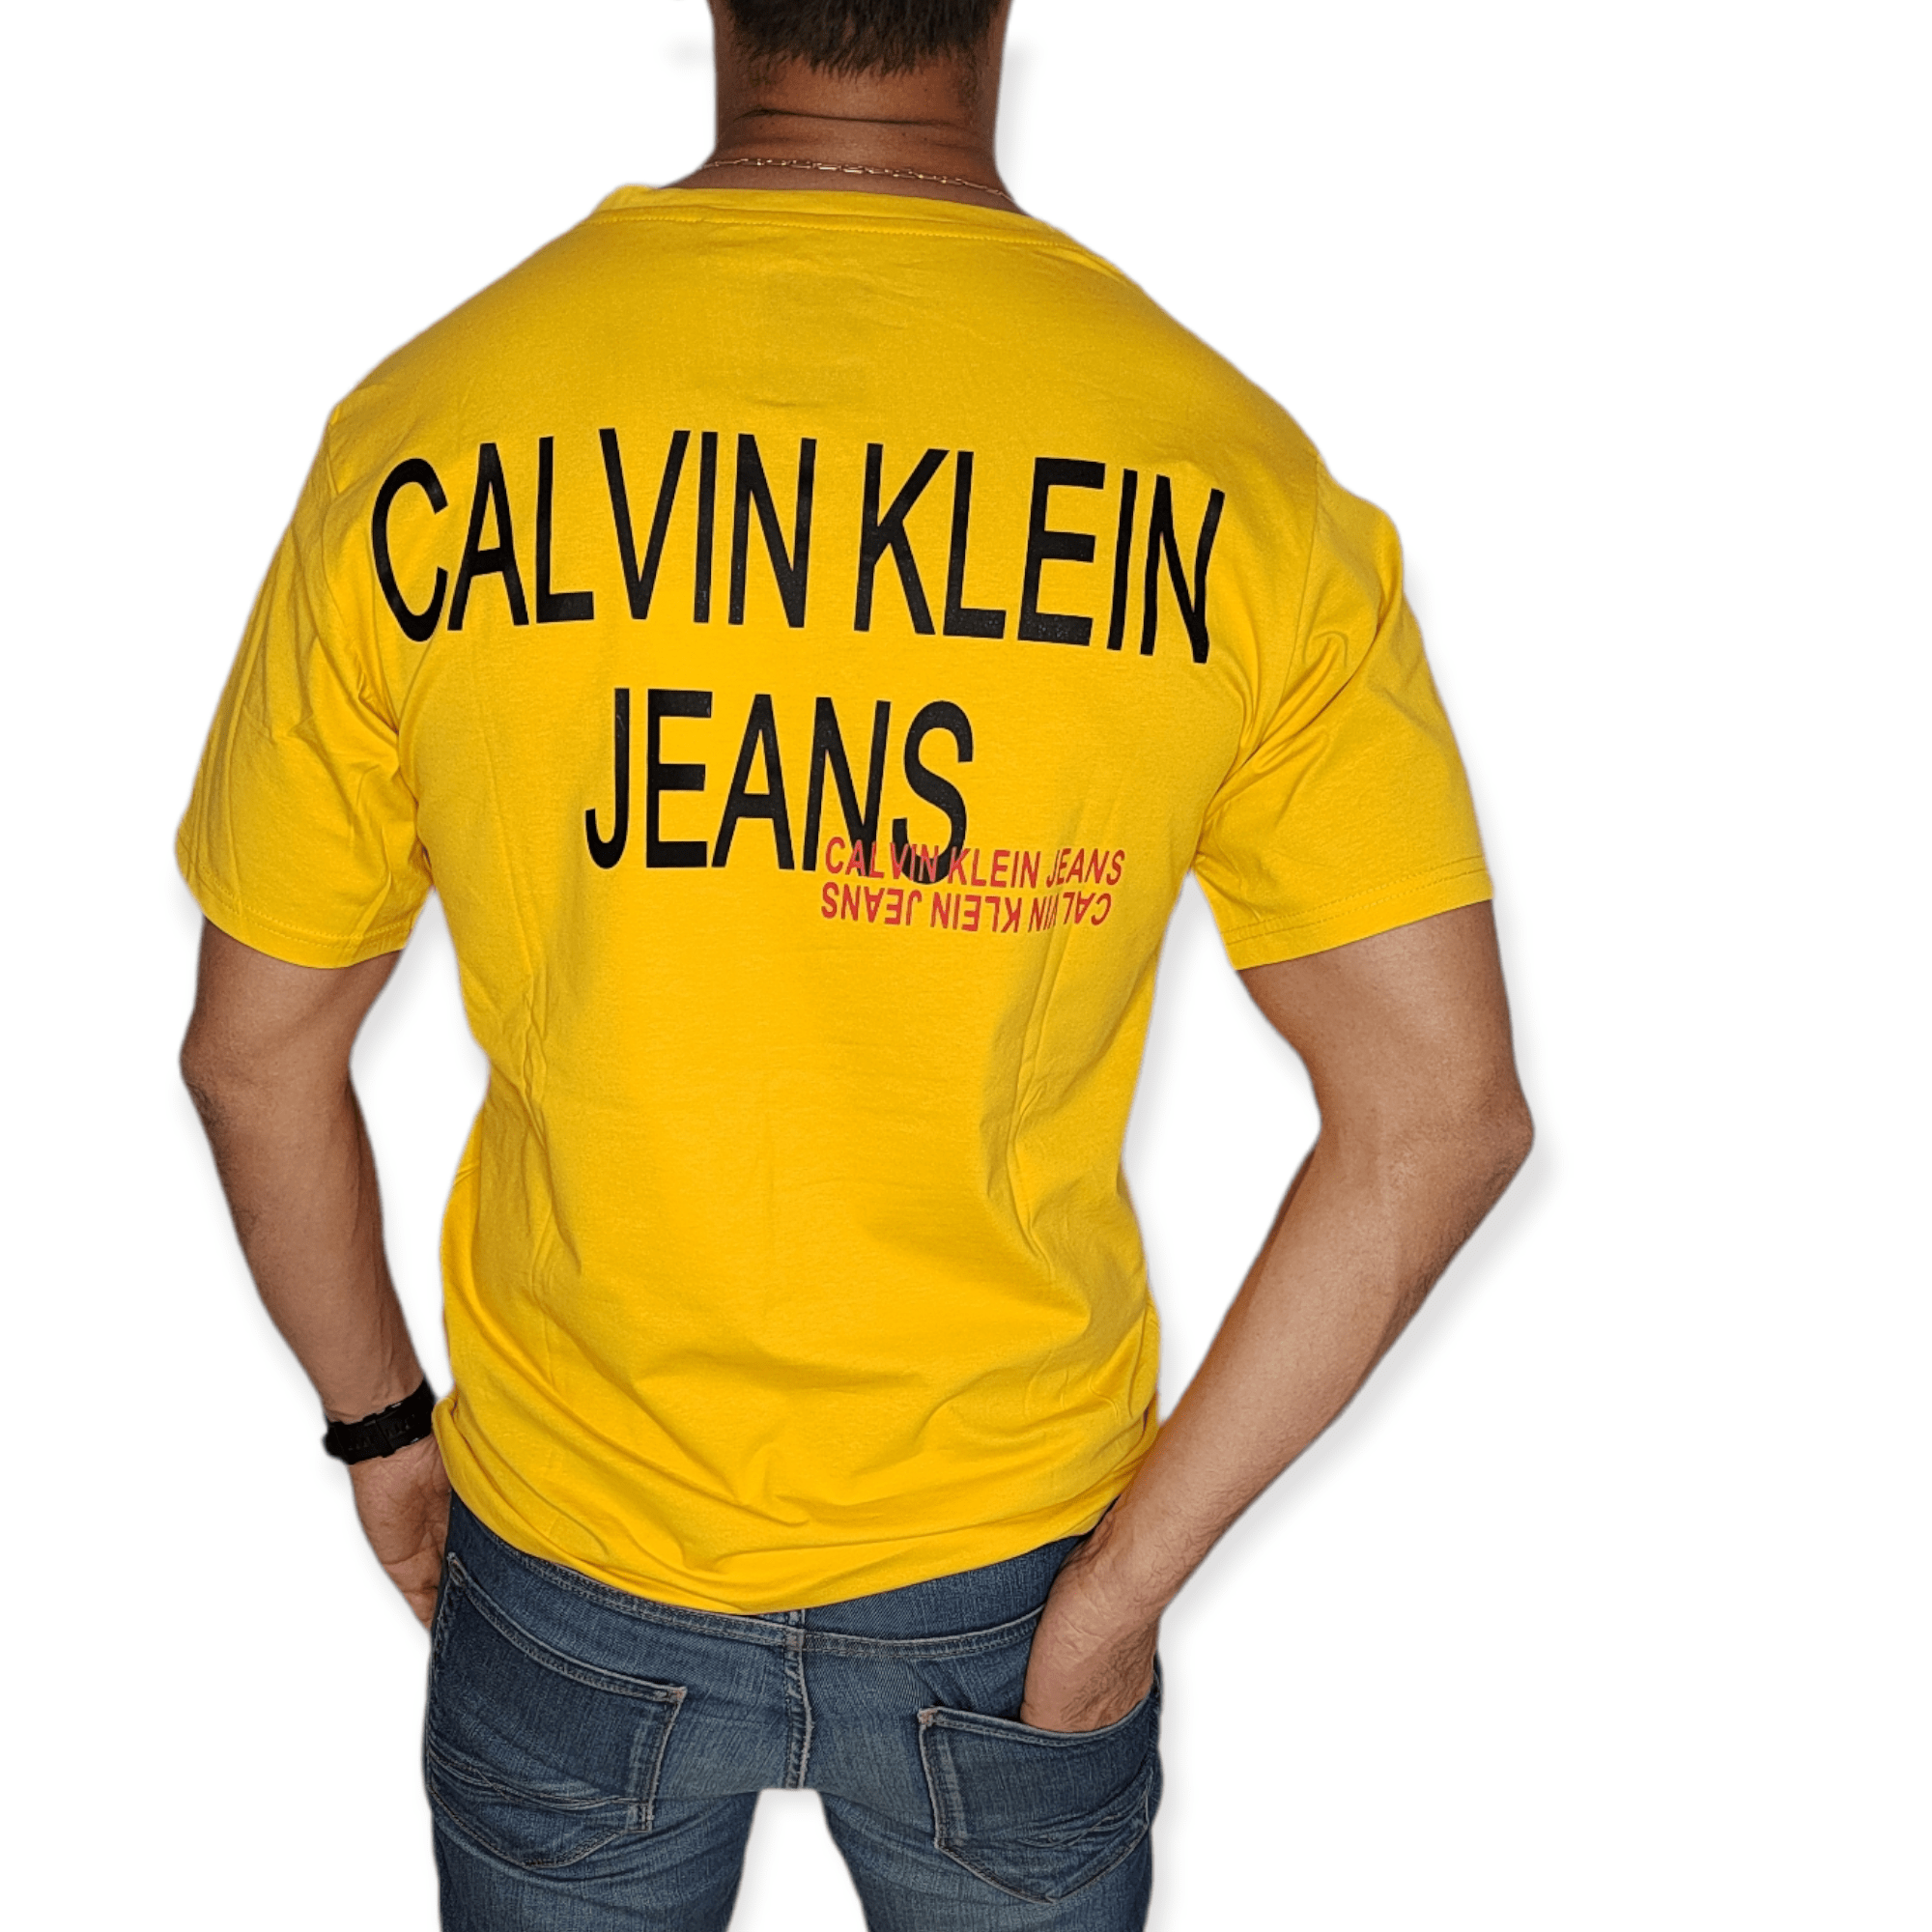 ElOutlet - Men Summer Men T-Shirt Men Round Tshirt (CK) (Slim-Fit) - Yellow